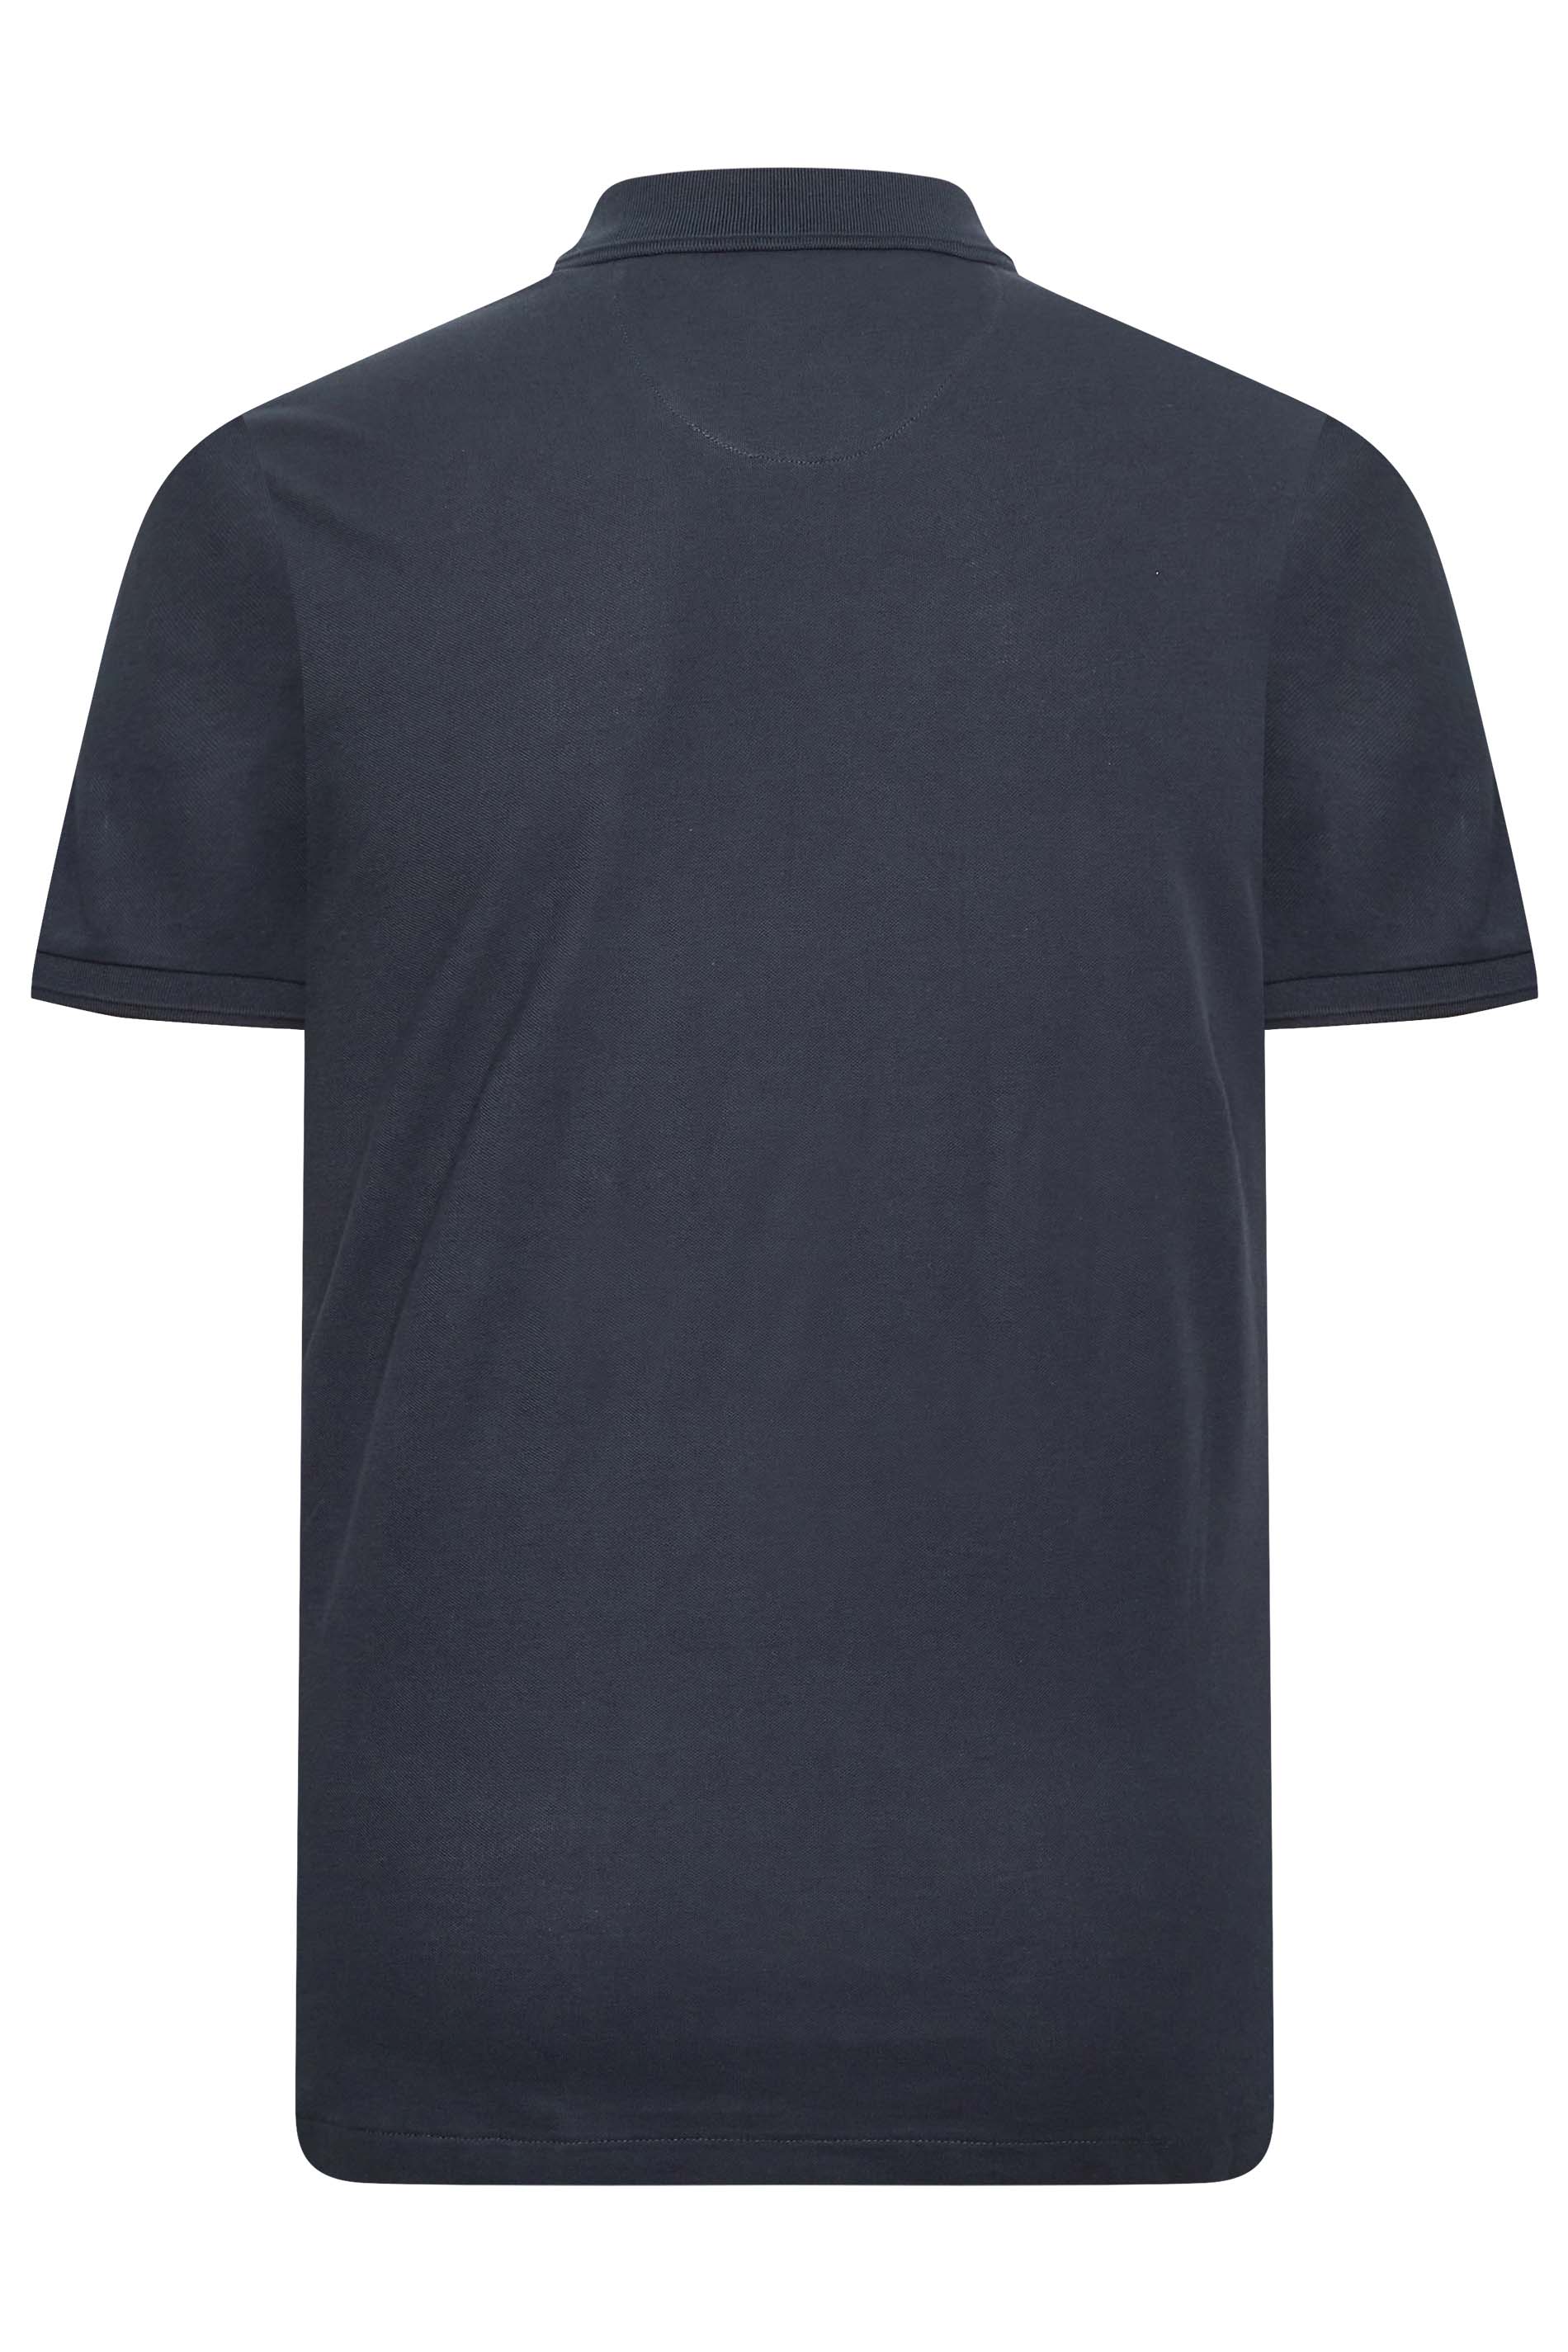 PENGUIN MUNSINGWEAR Big & Tall Navy Blue Polo Shirt | BadRhino 3